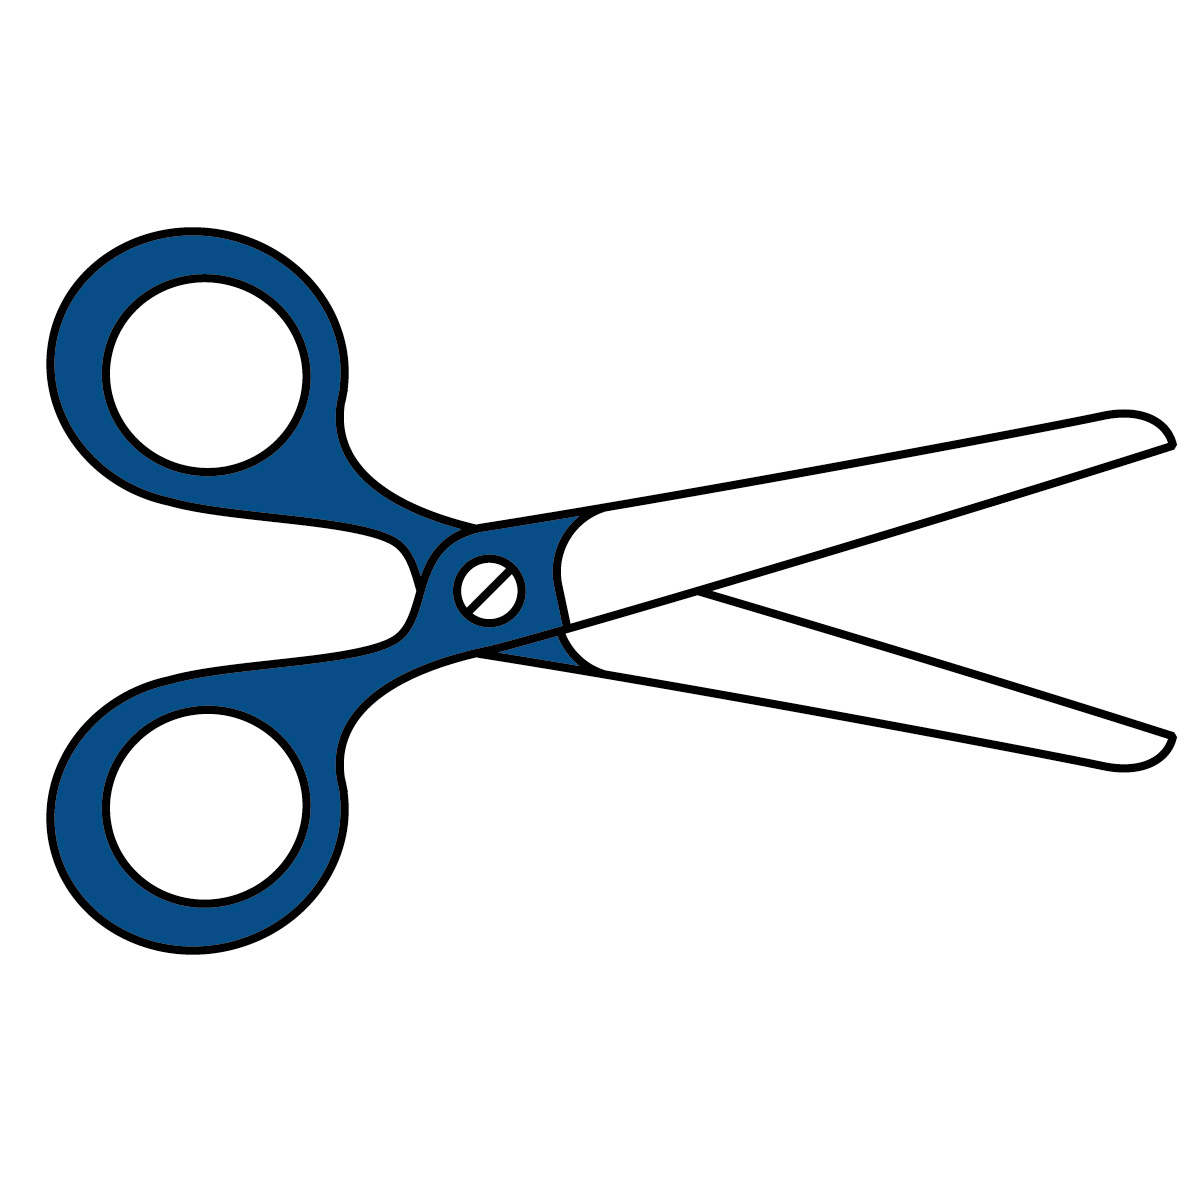 Free Scissors Clip Art, Download Free Scissors Clip Art png images ...